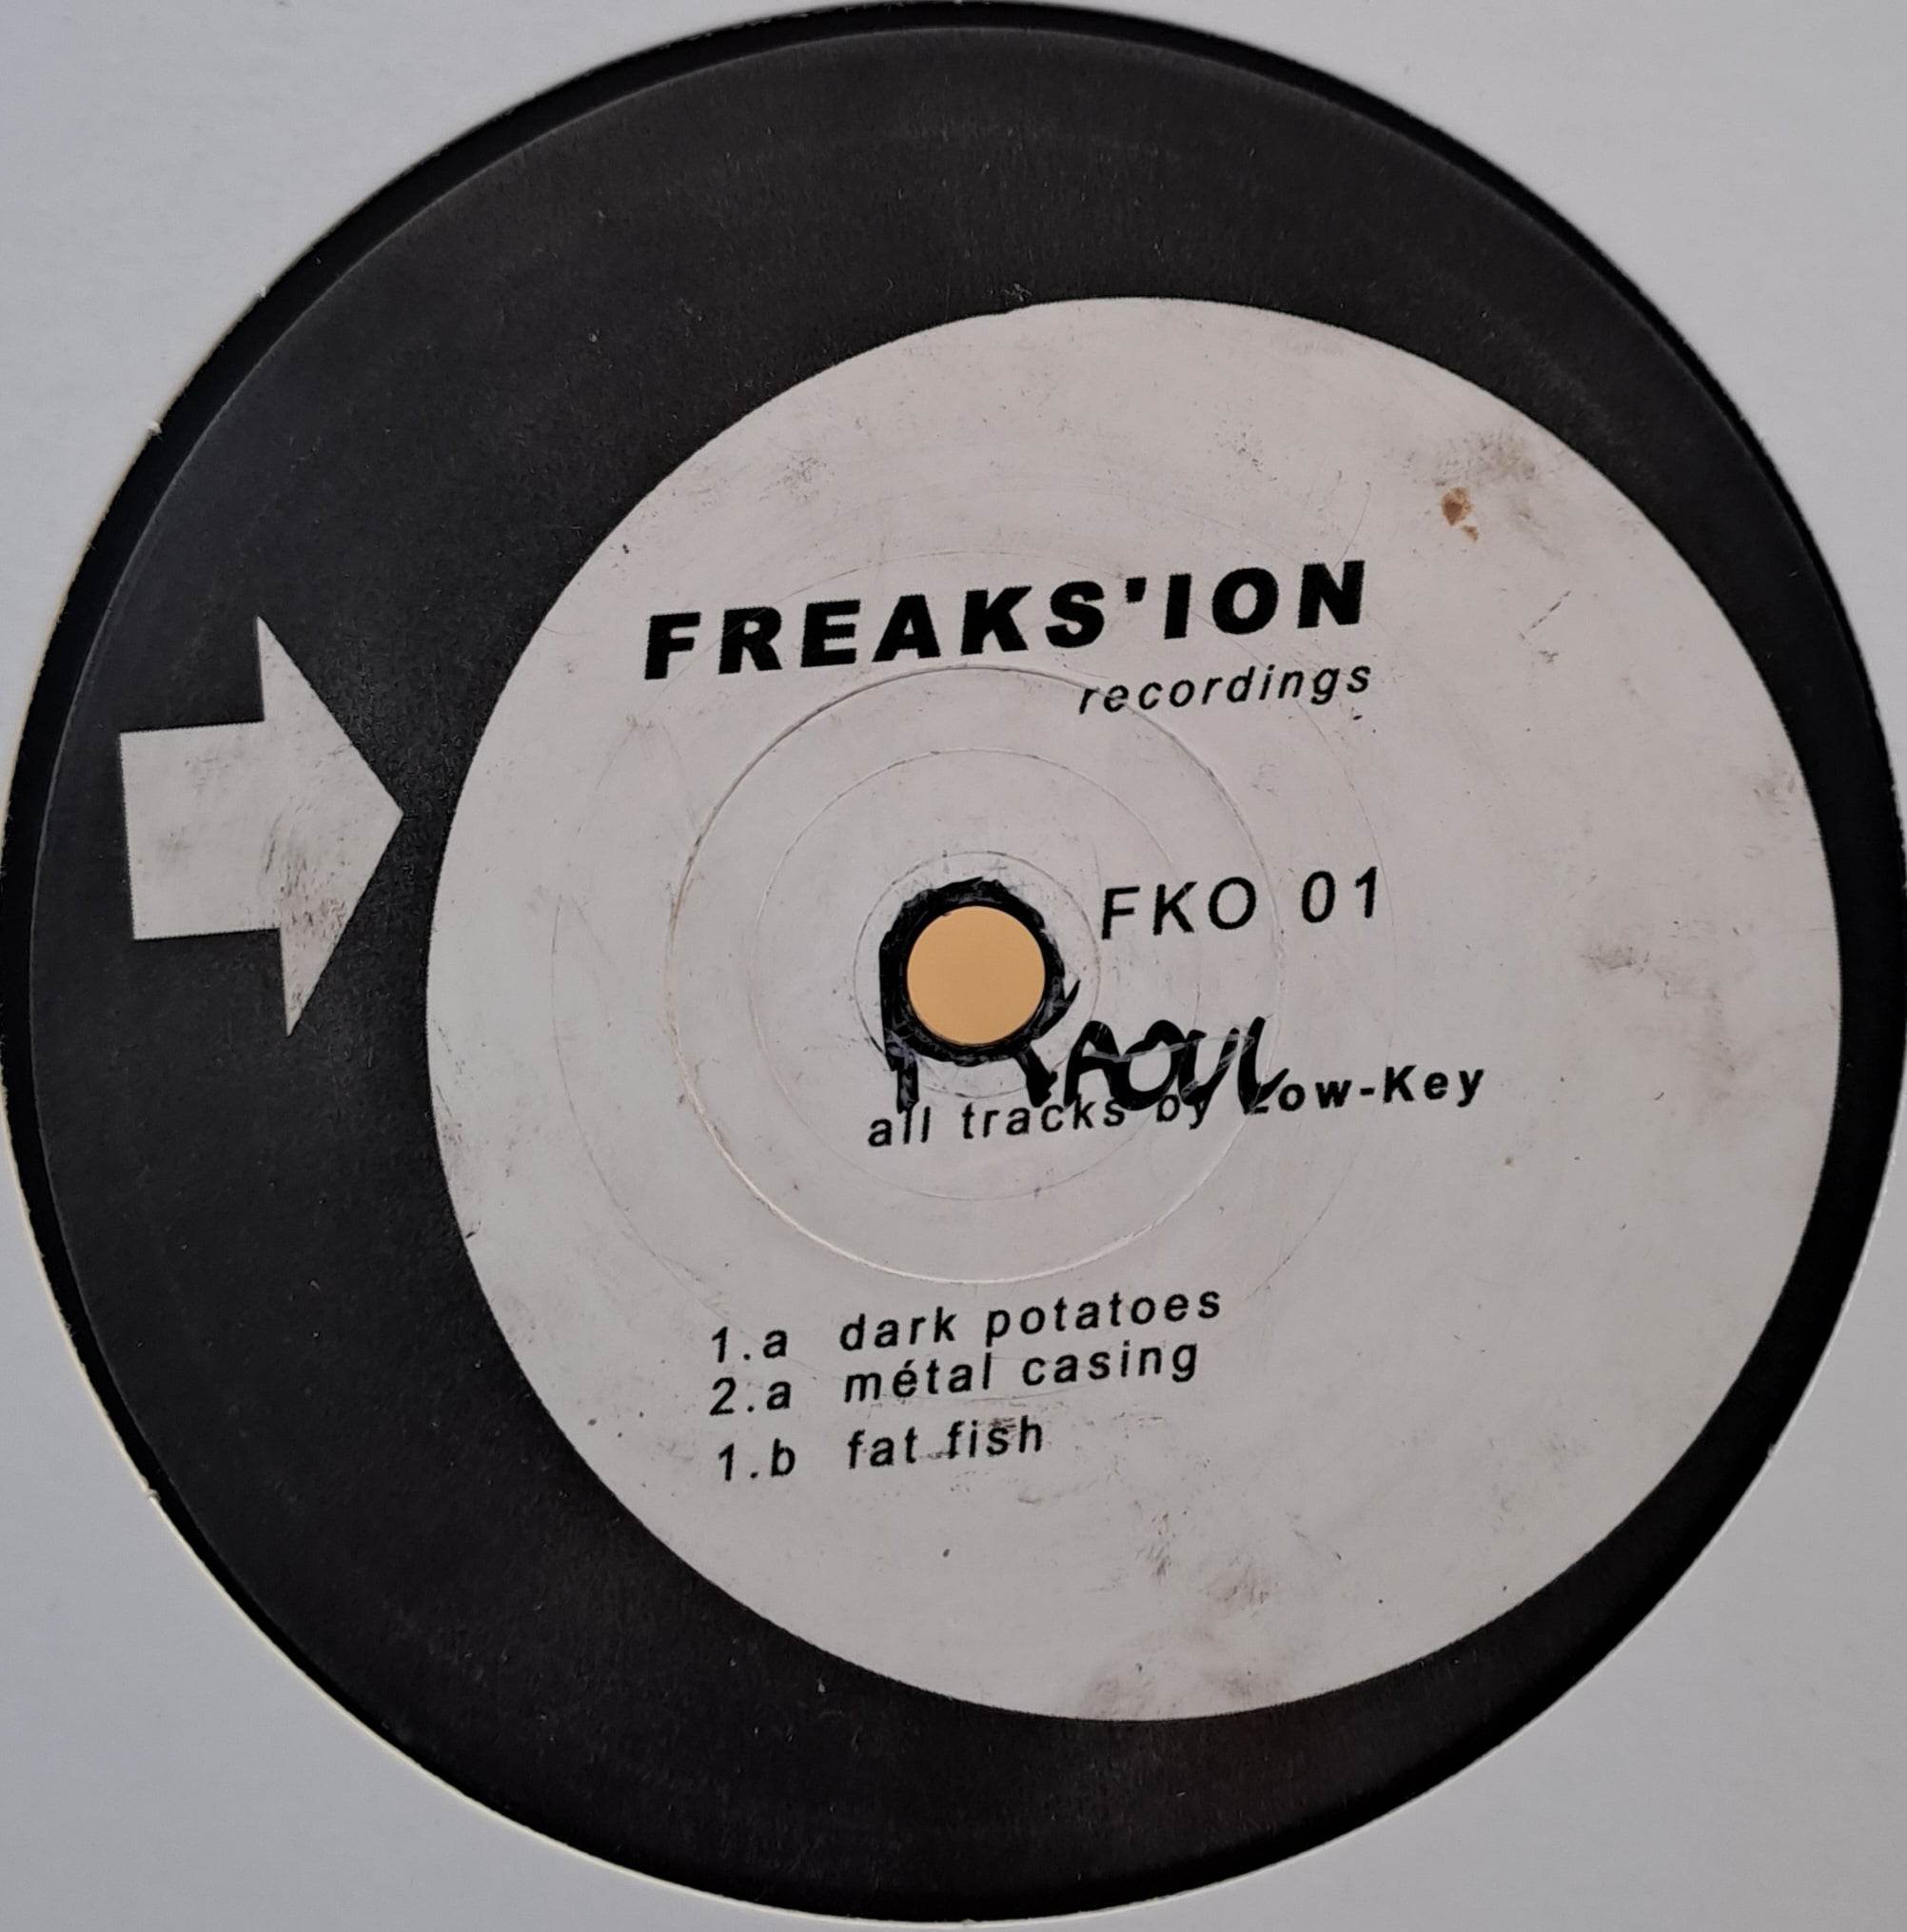 Freaks'ion 01 - vinyle hard techno